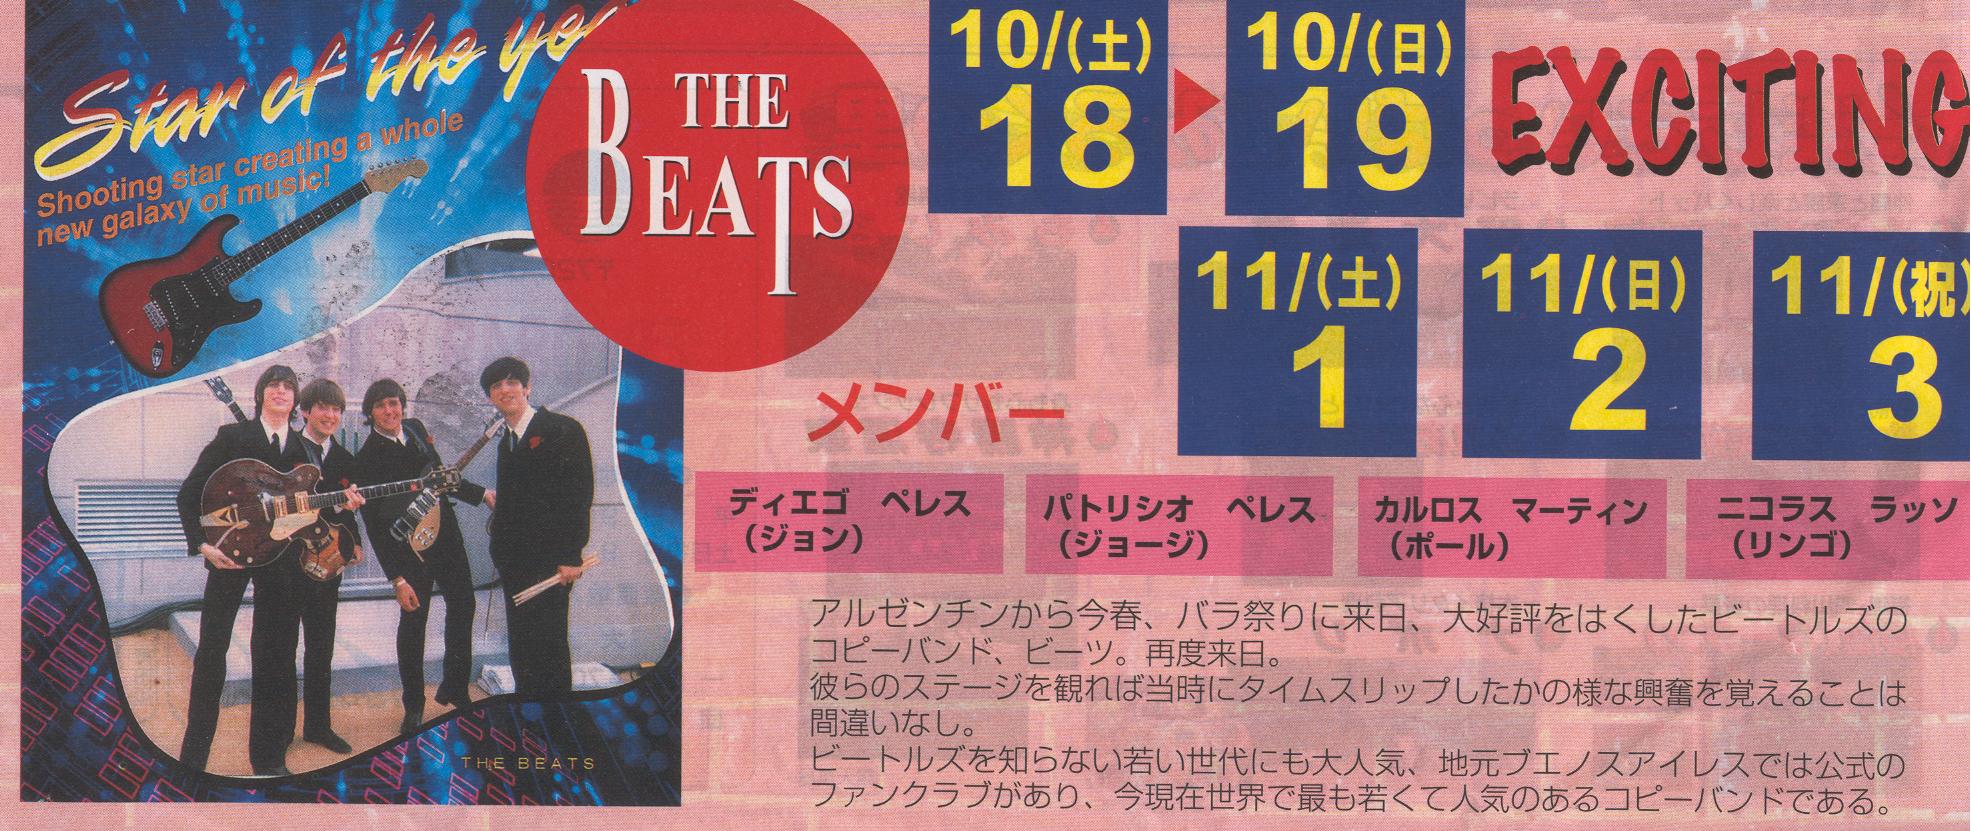 THE BEATS - Japan promotional flyer